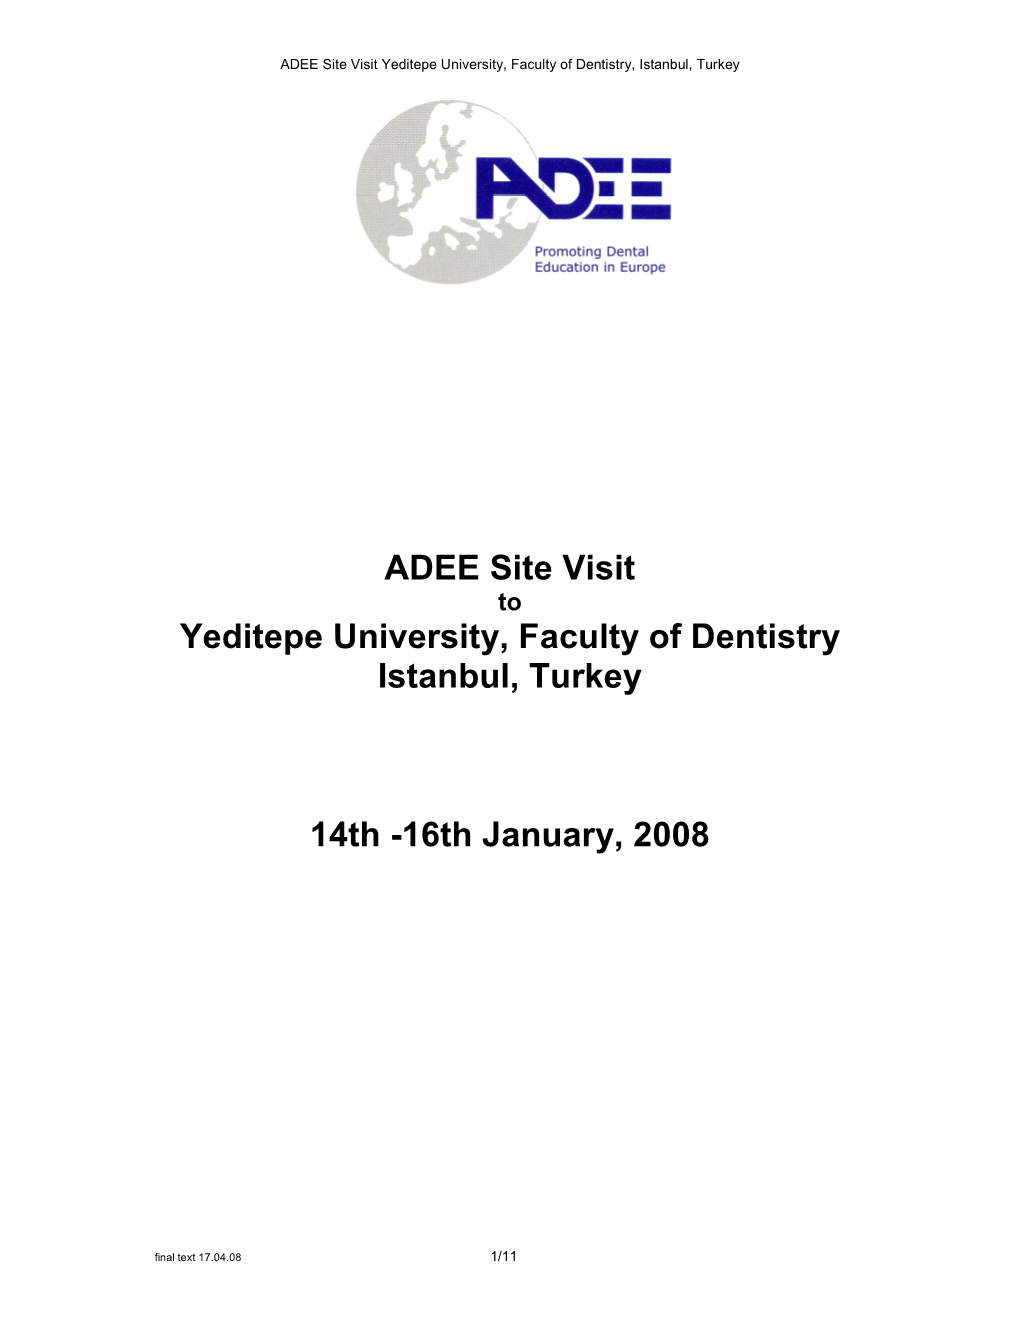 ADEE Site Visit Yeditepe University, Faculty of Dentistry Istanbul, Turkey